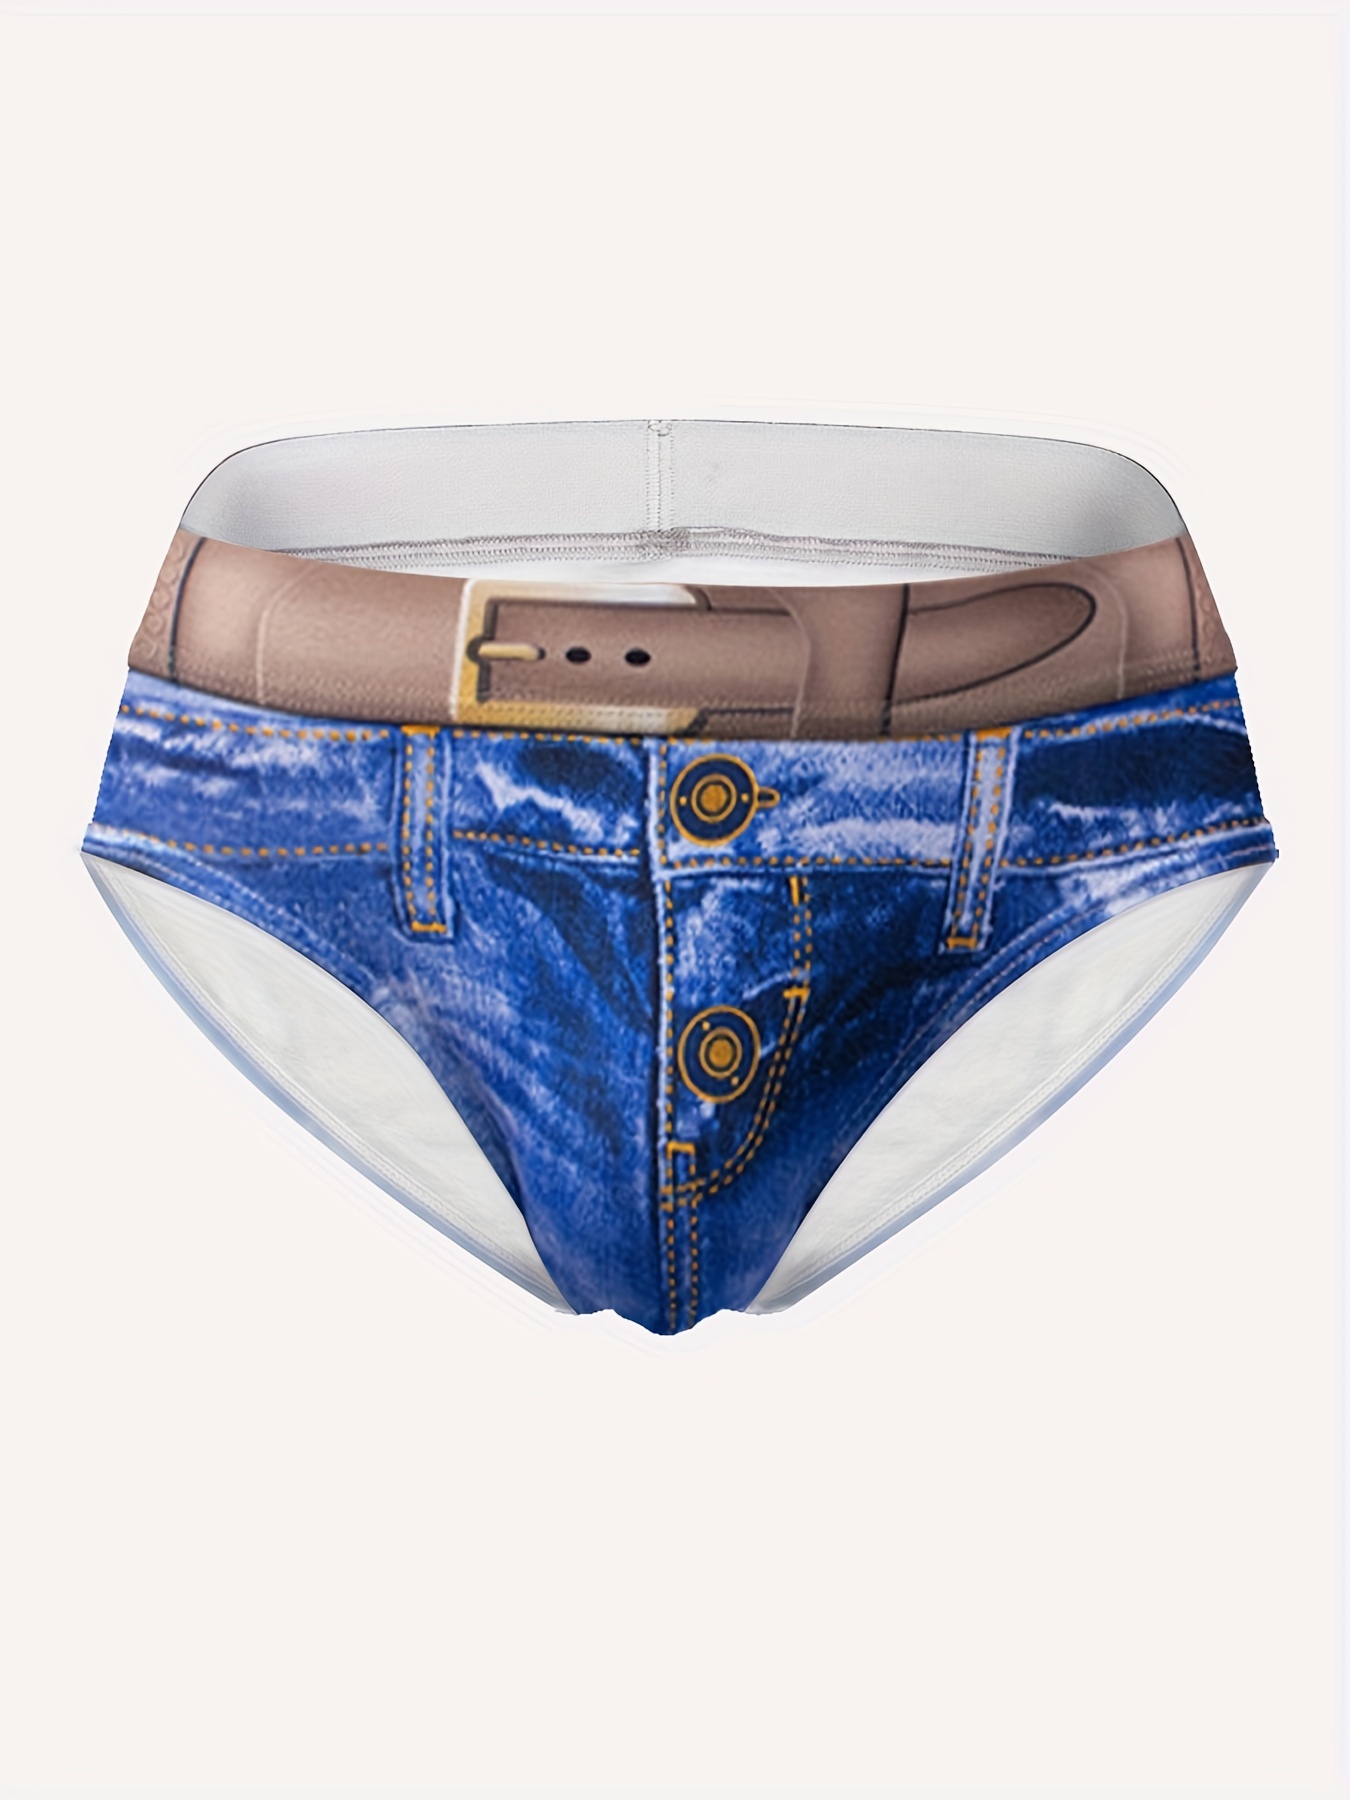 Men's Cotton Underwear, 3D * Jeans Print Fashion Briefs, Sexy Comfortable  Breathable briefs Underpants, Men's Novelty Underwear